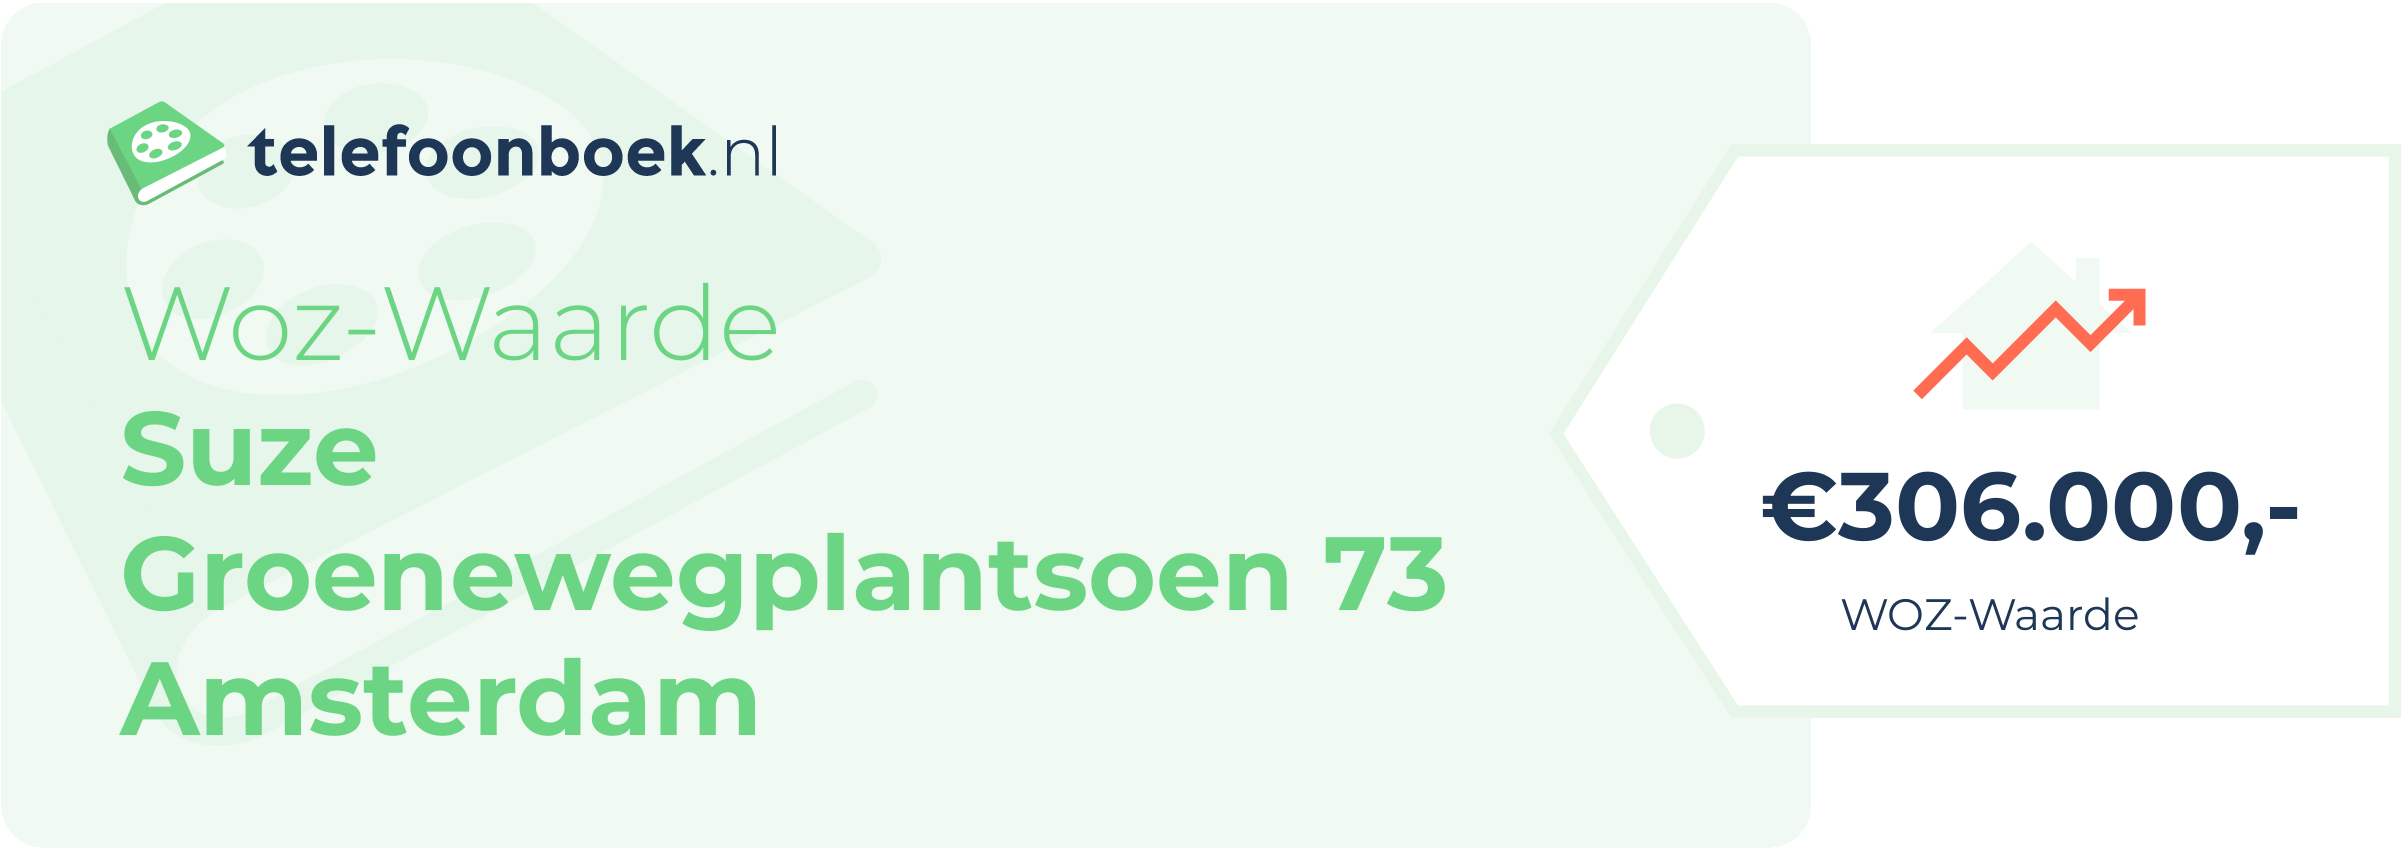 WOZ-waarde Suze Groenewegplantsoen 73 Amsterdam